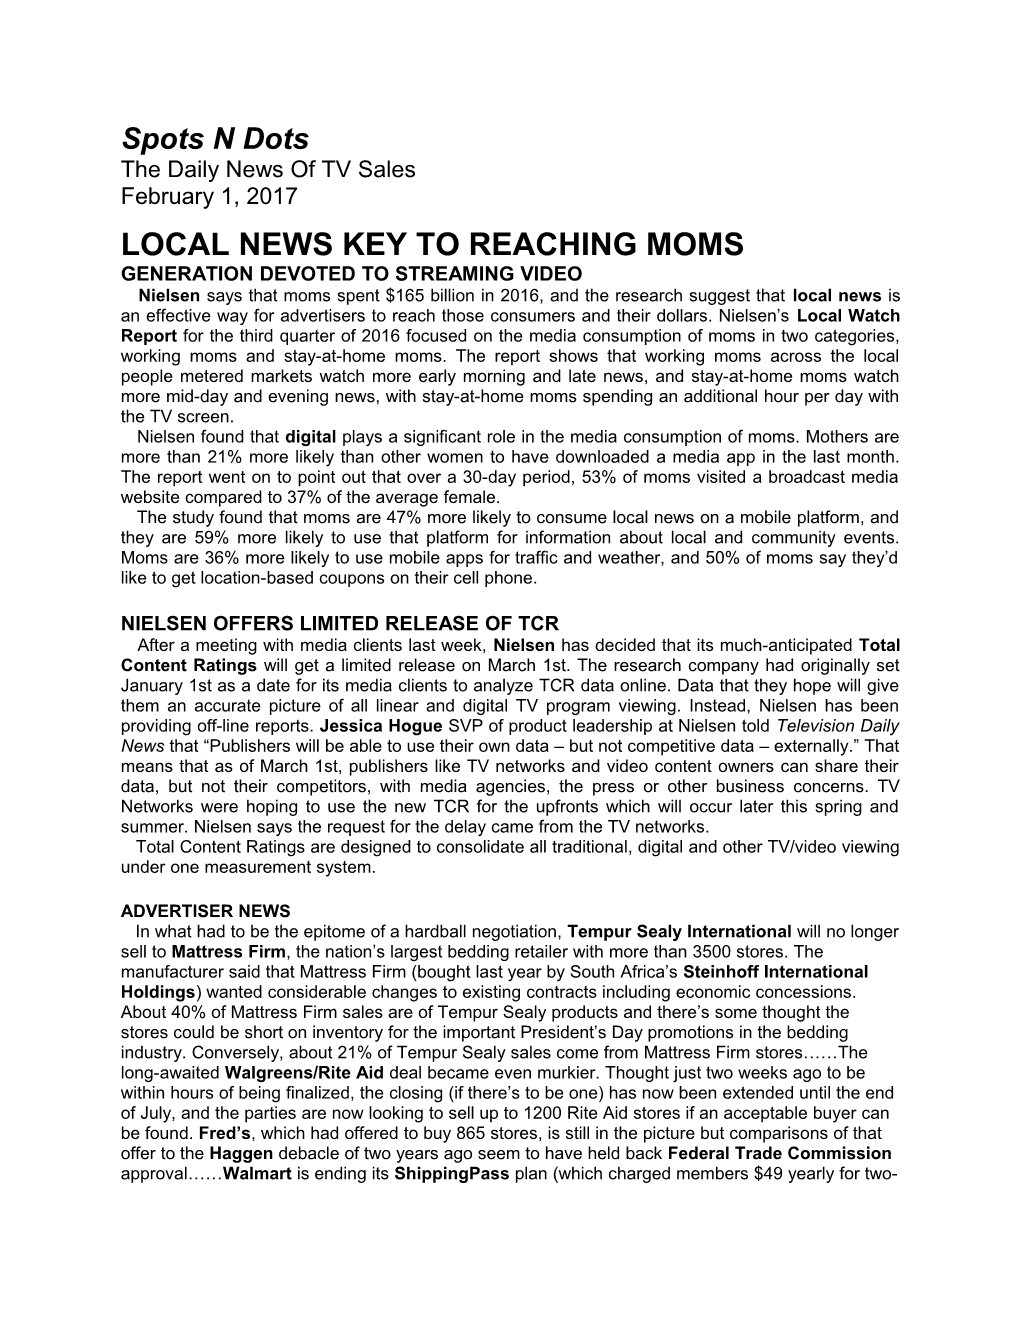 Local News Key to Reaching Moms